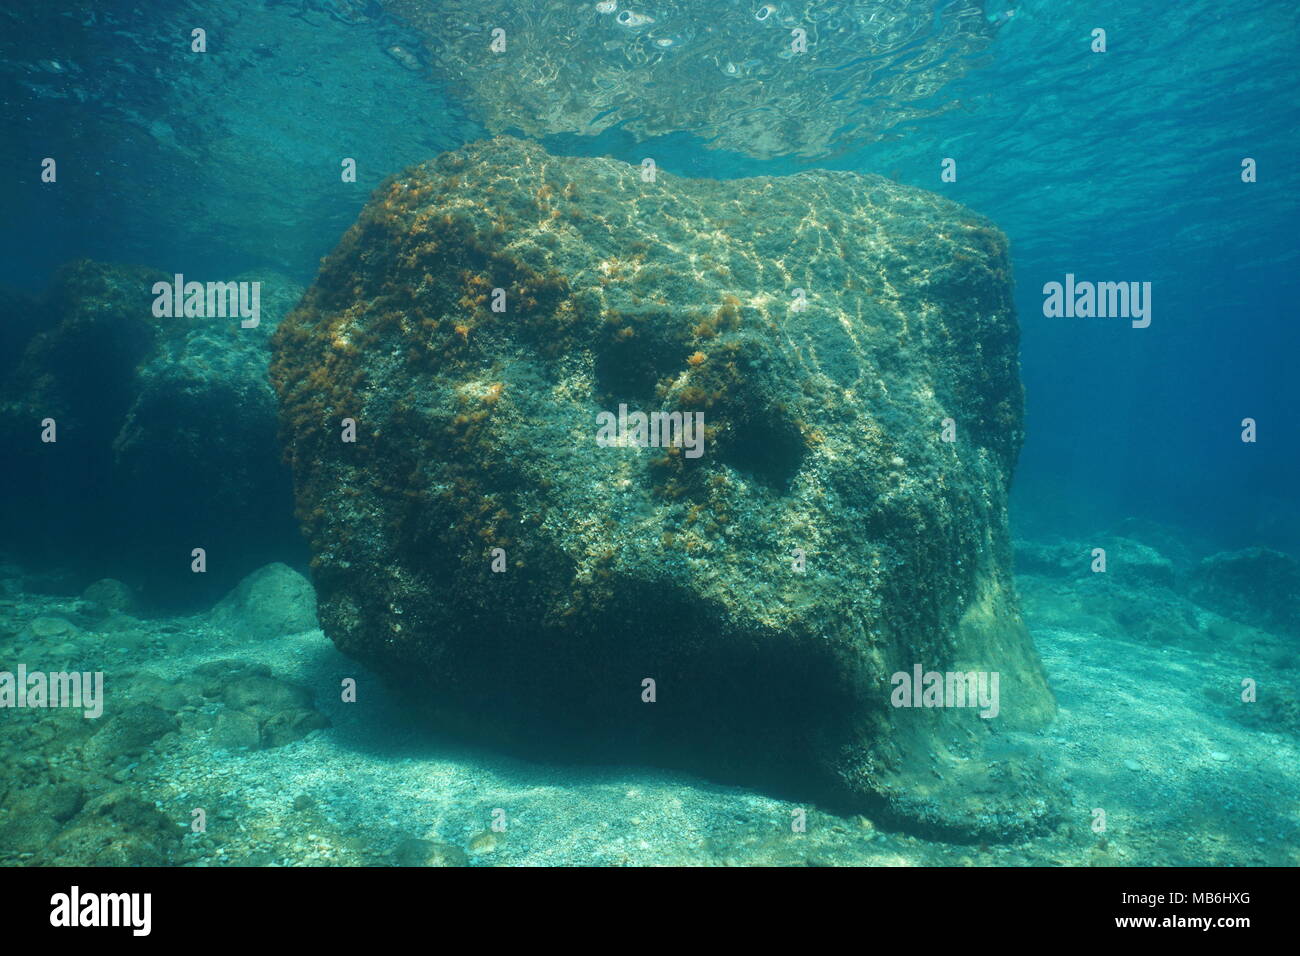 A large rock underwater below water surface in the Mediterranean sea, Costa Brava, Cap de Creus, Catalonia, Spain Stock Photo